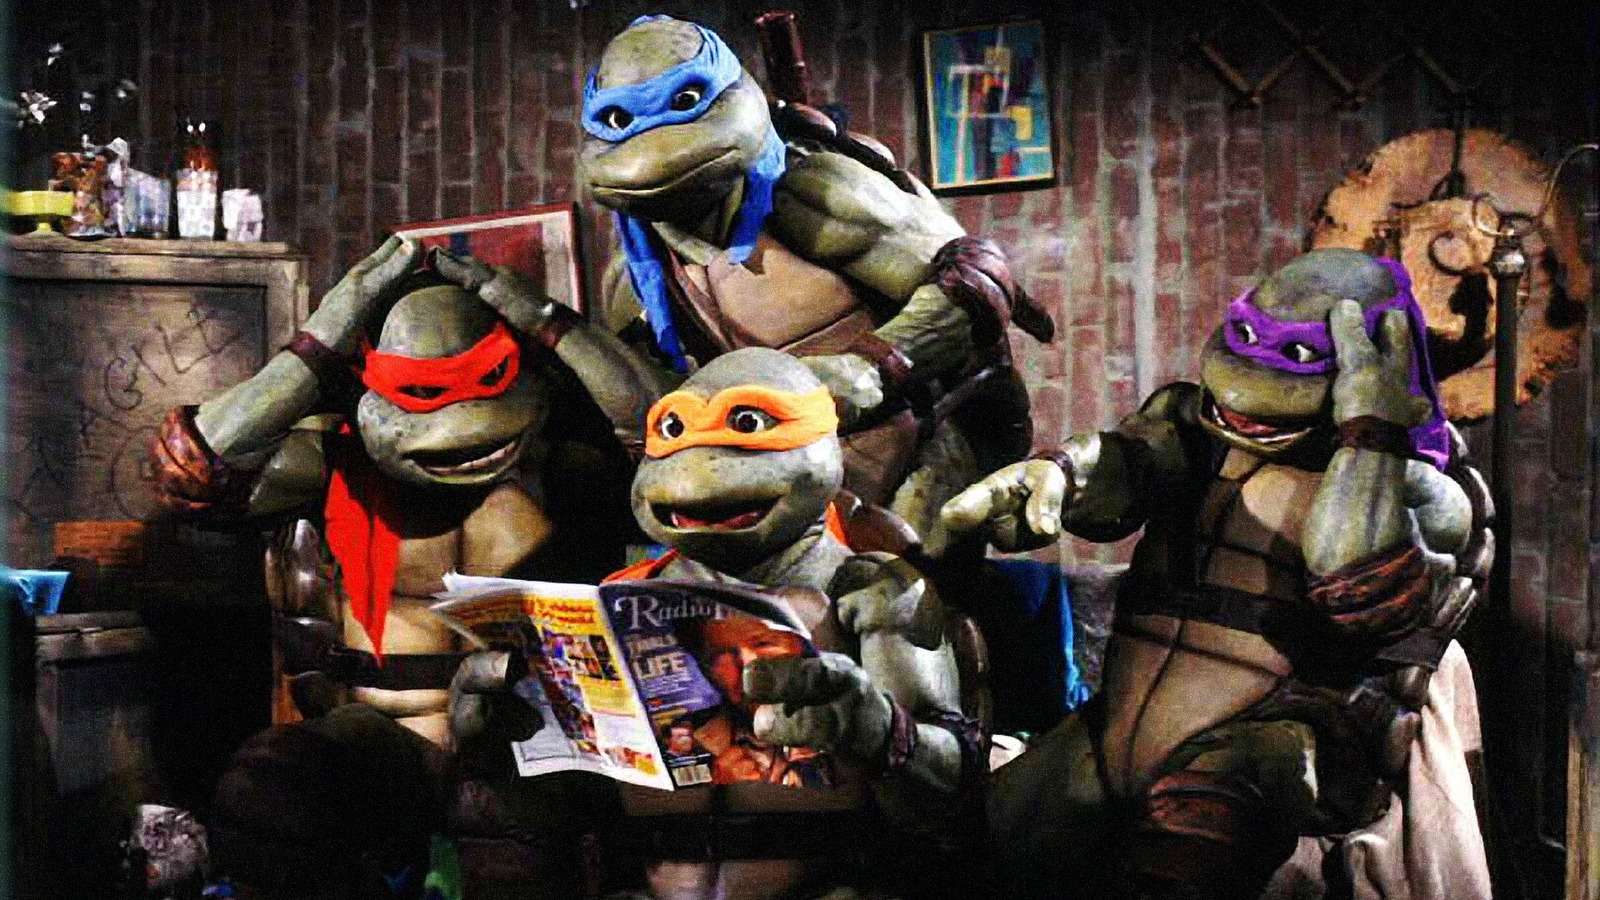 Teenage Mutant Ninja Turtles Actor: Making Films Was 'Worst Experience